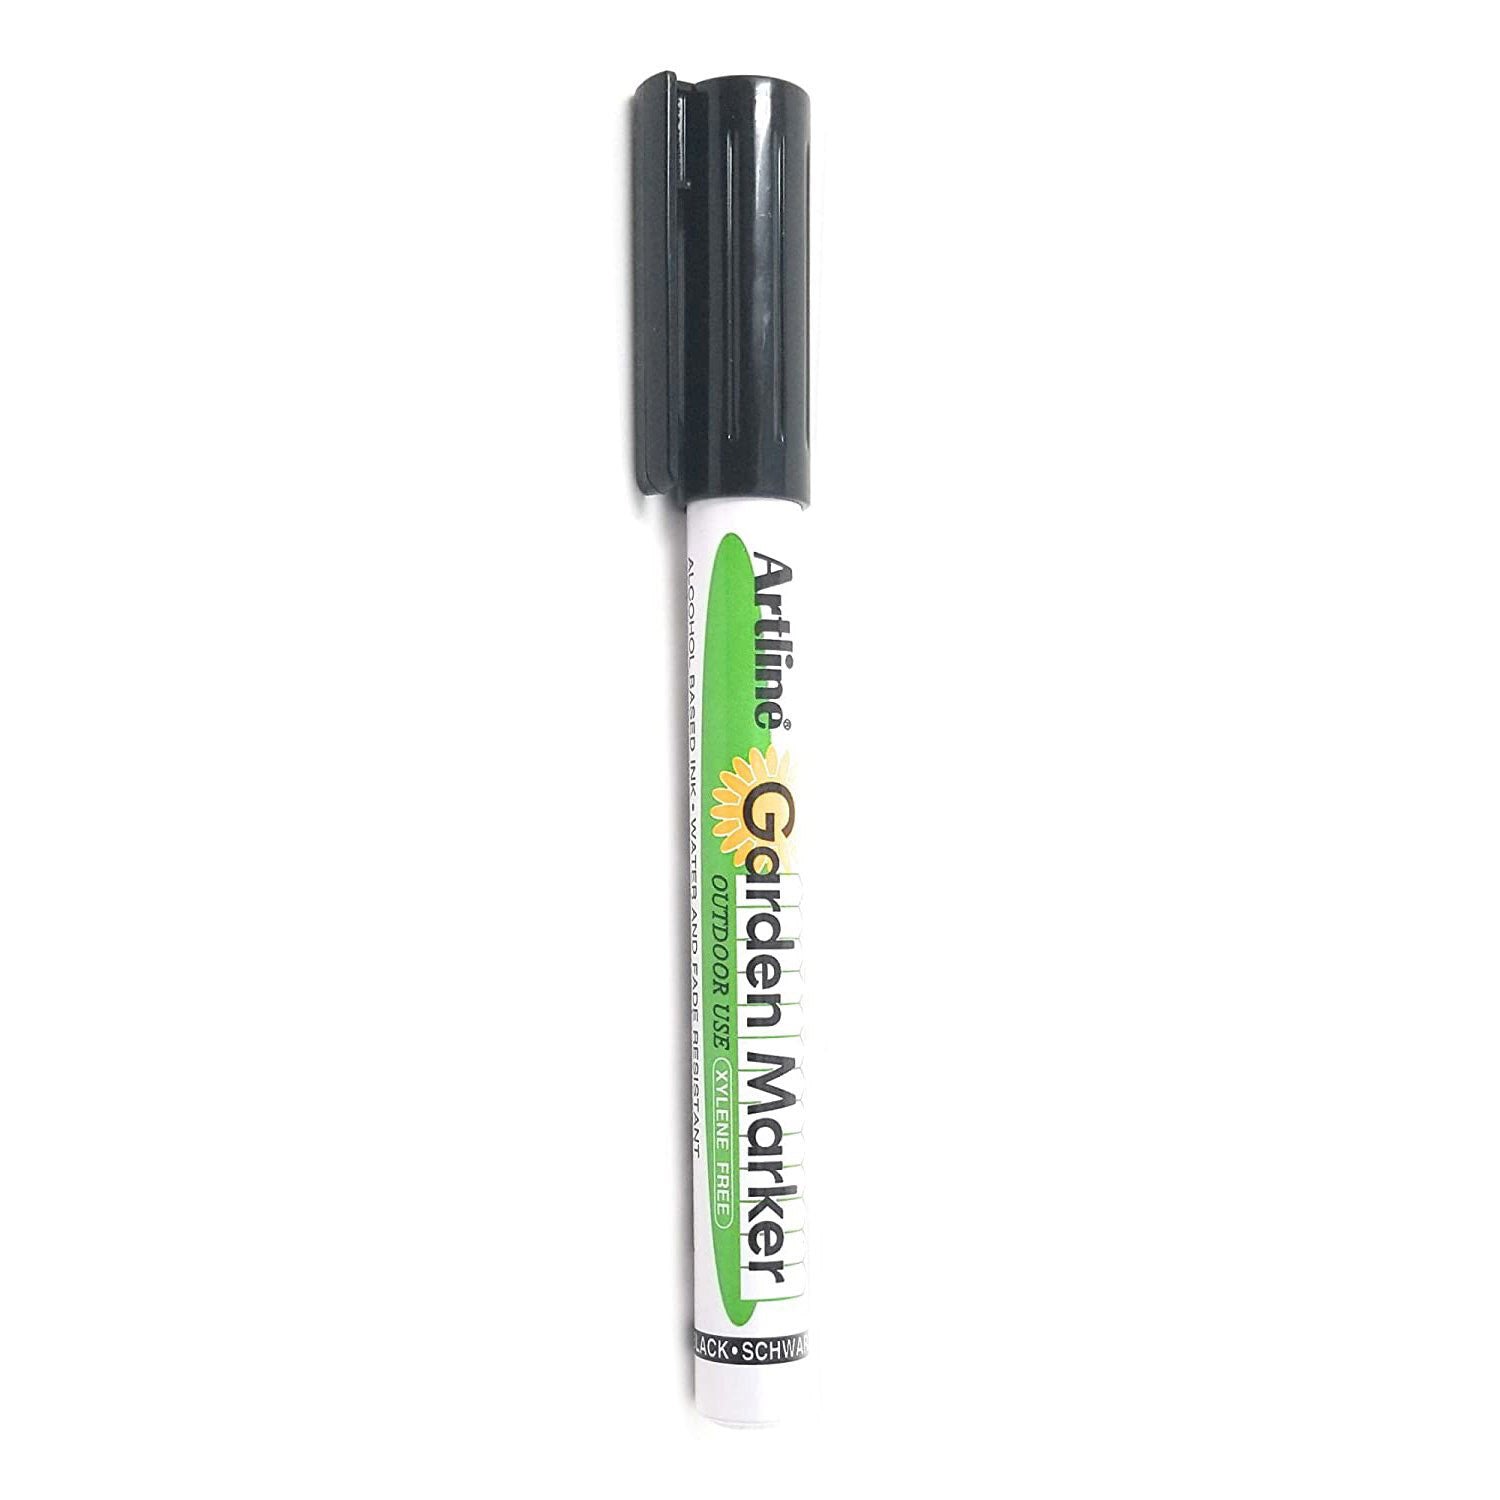 4x Garden marker Pen Waterproof Black Ink Token Pen Garden Plant Labeling  Gadget - AliExpress